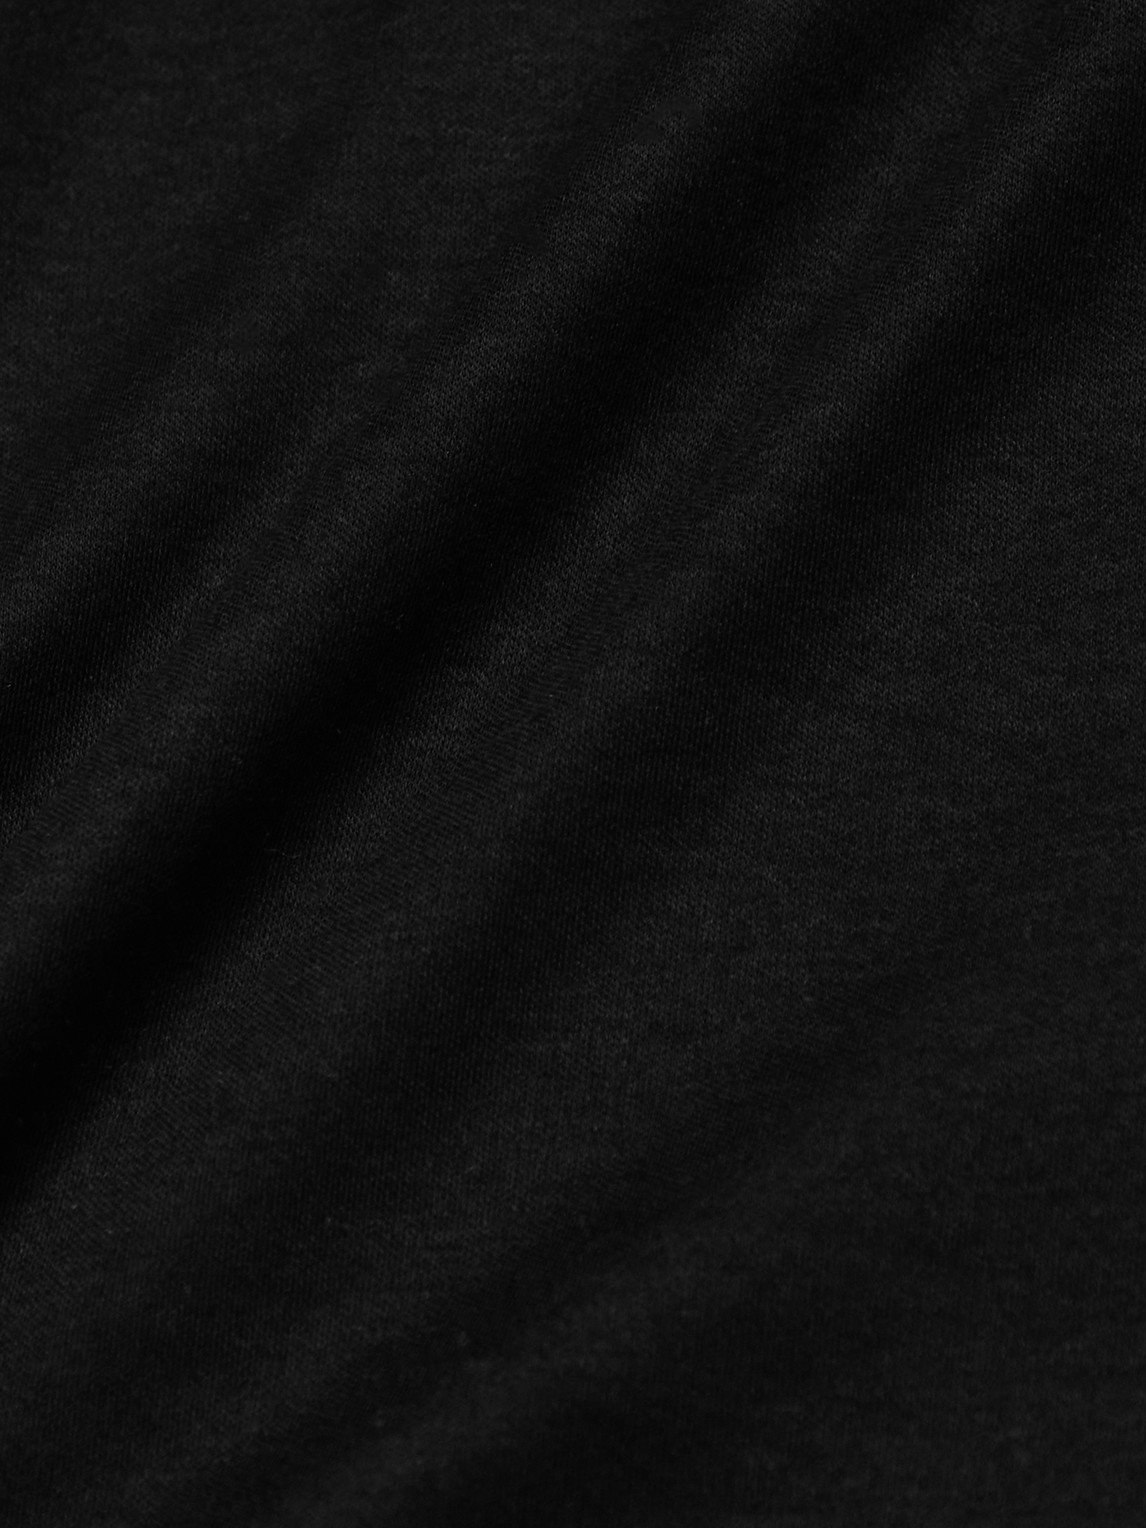 Shop Zimmerli Sea Island Cotton-jersey T-shirt In Black